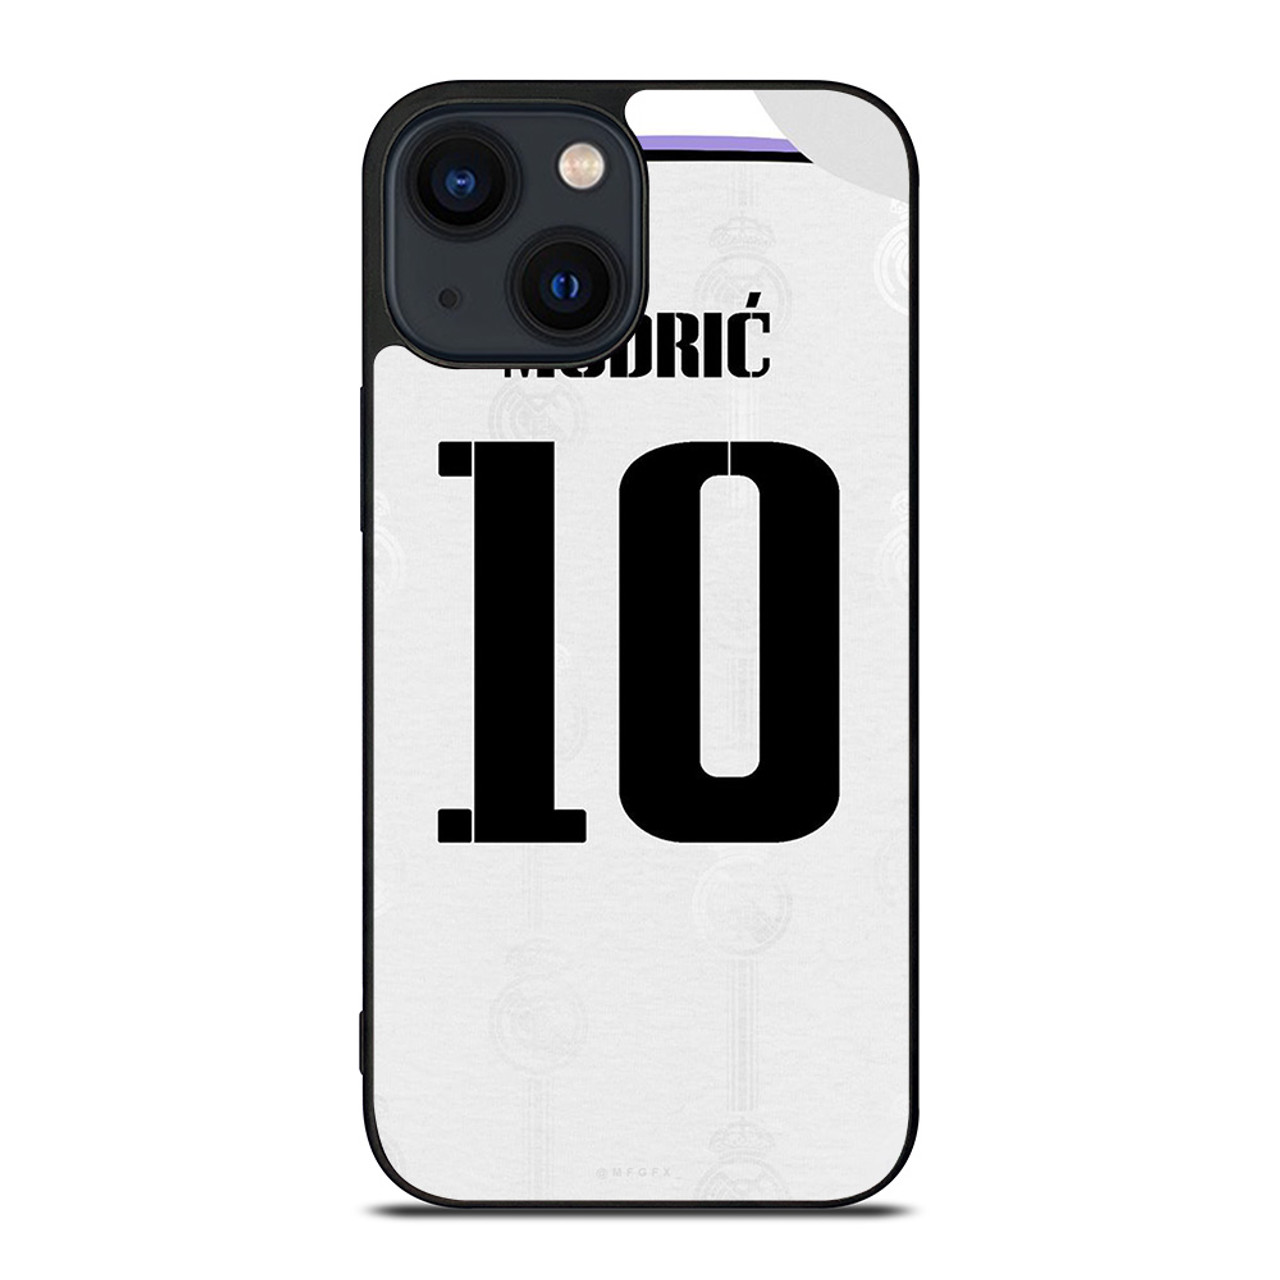 7 JAMES BOND iPhone 14 Plus Case Cover